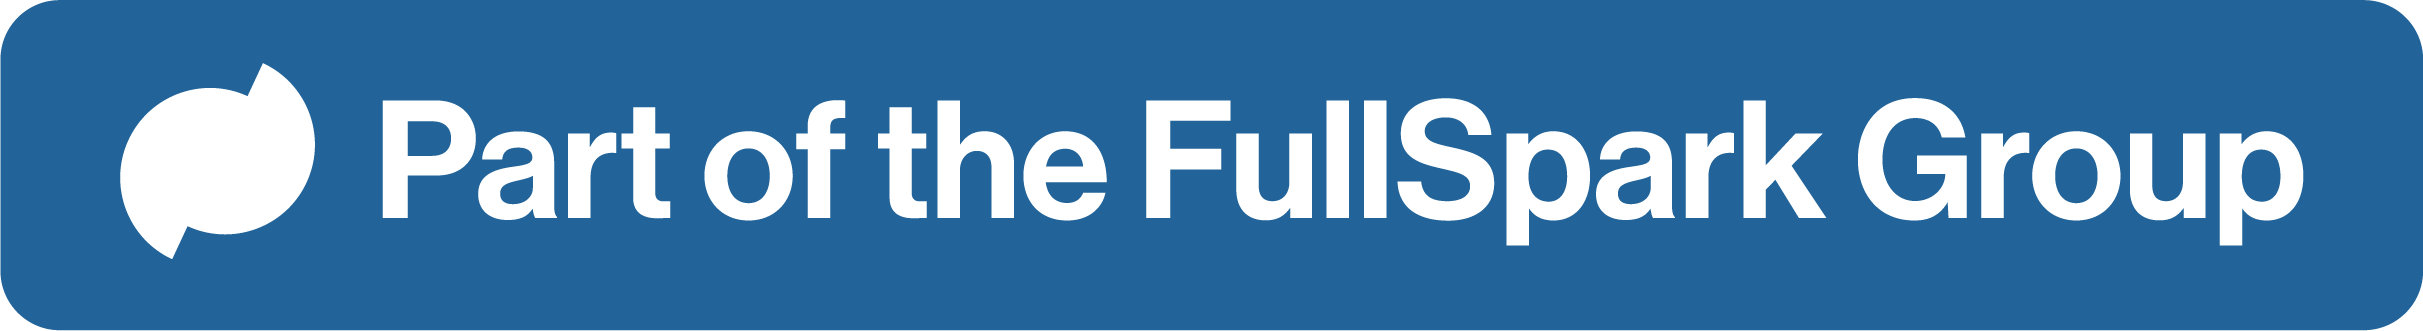 fullspark logo and text